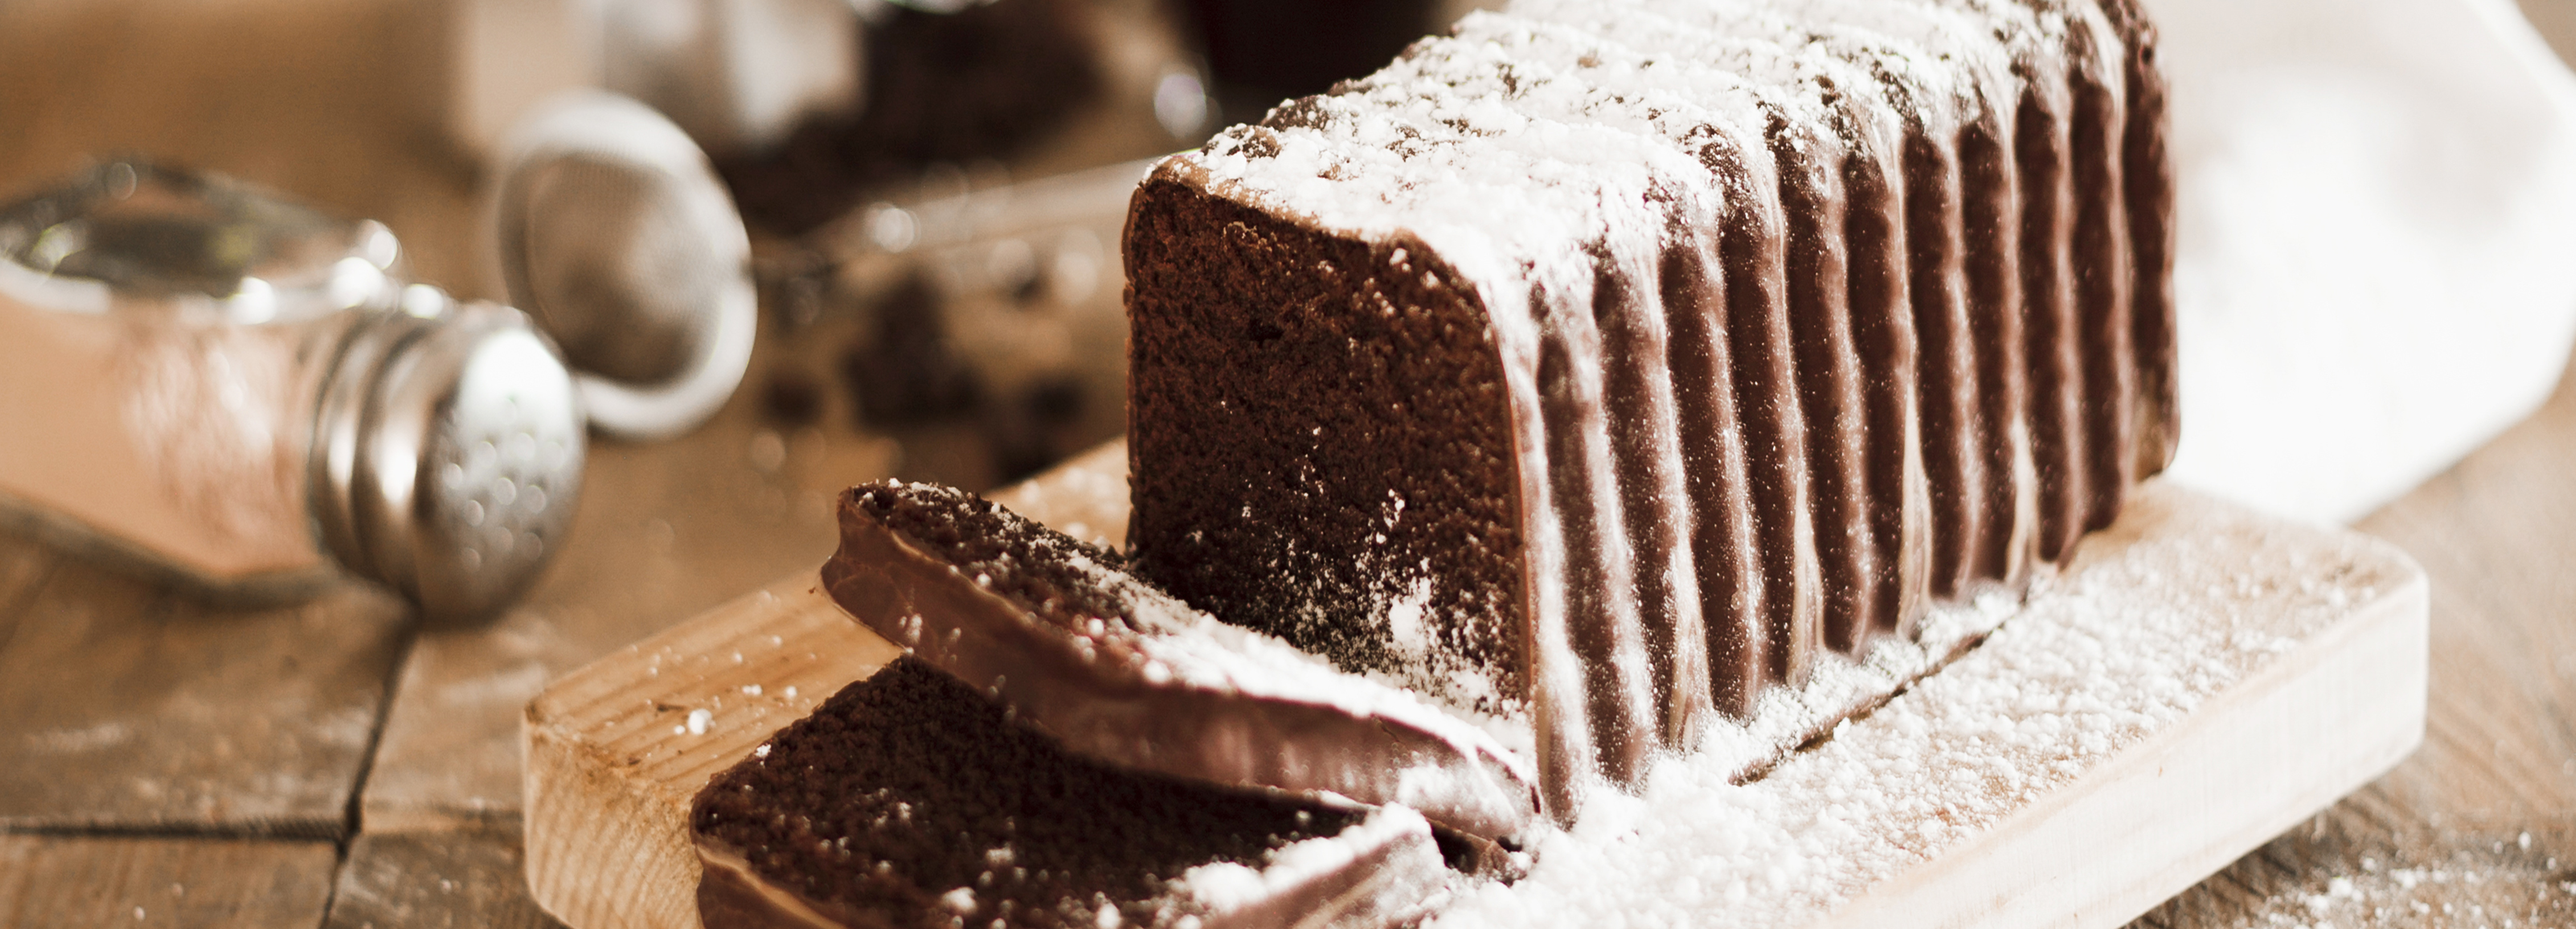 sugar-dusting-slice-cake-chopping-board